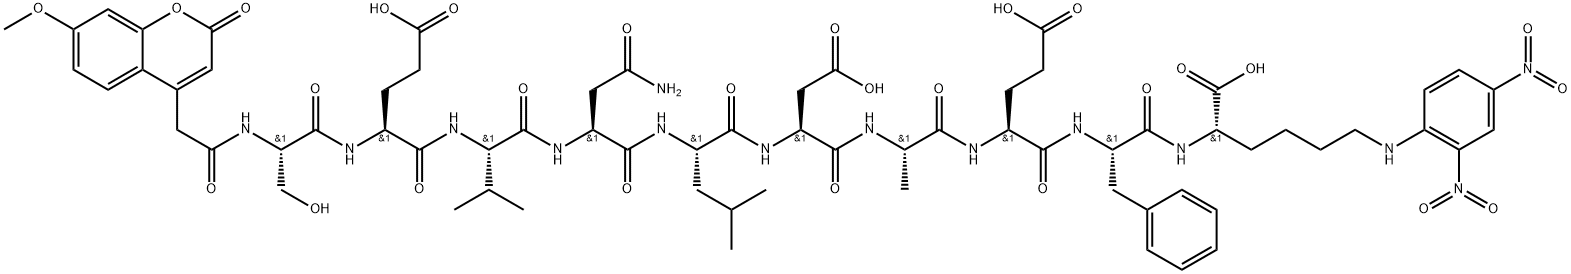 1802078-31-4 Mca-(Asn670,Leu671)-Amyloid β/A4 Protein Precursor770(667-675)-Lys(Dnp) ammonium acetate salt